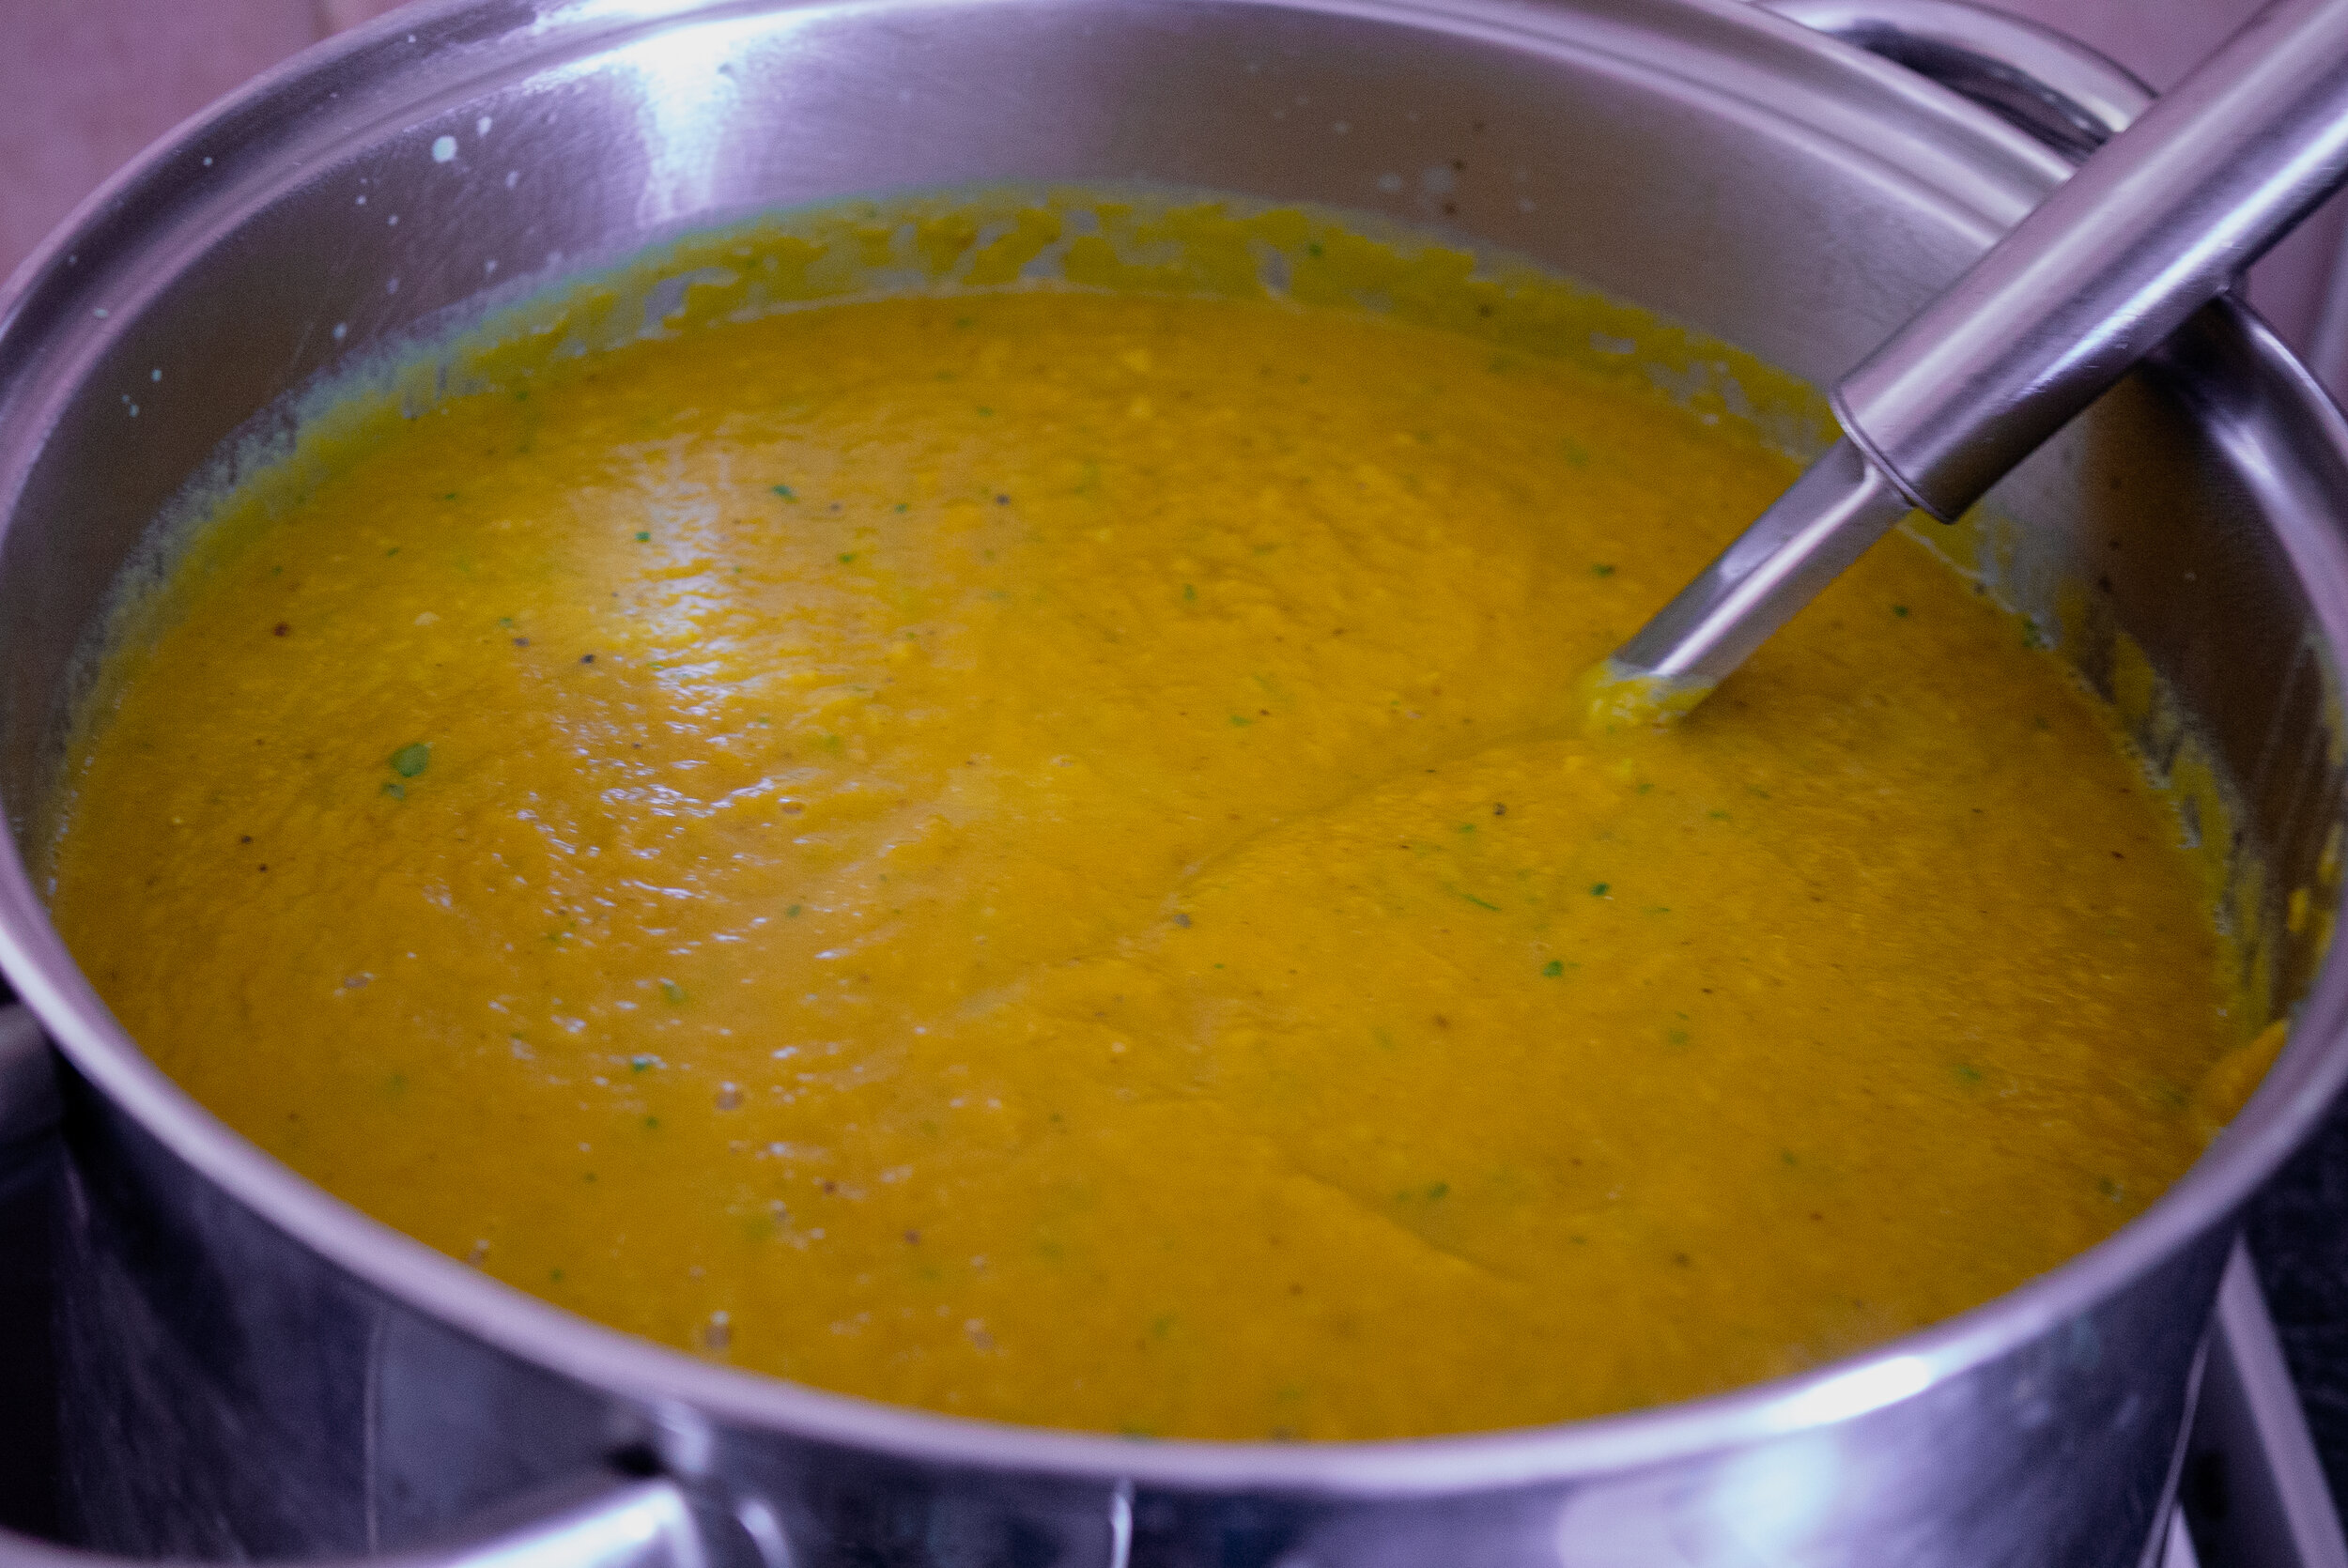 vegan lentil soup by kam sokhi allergy chef